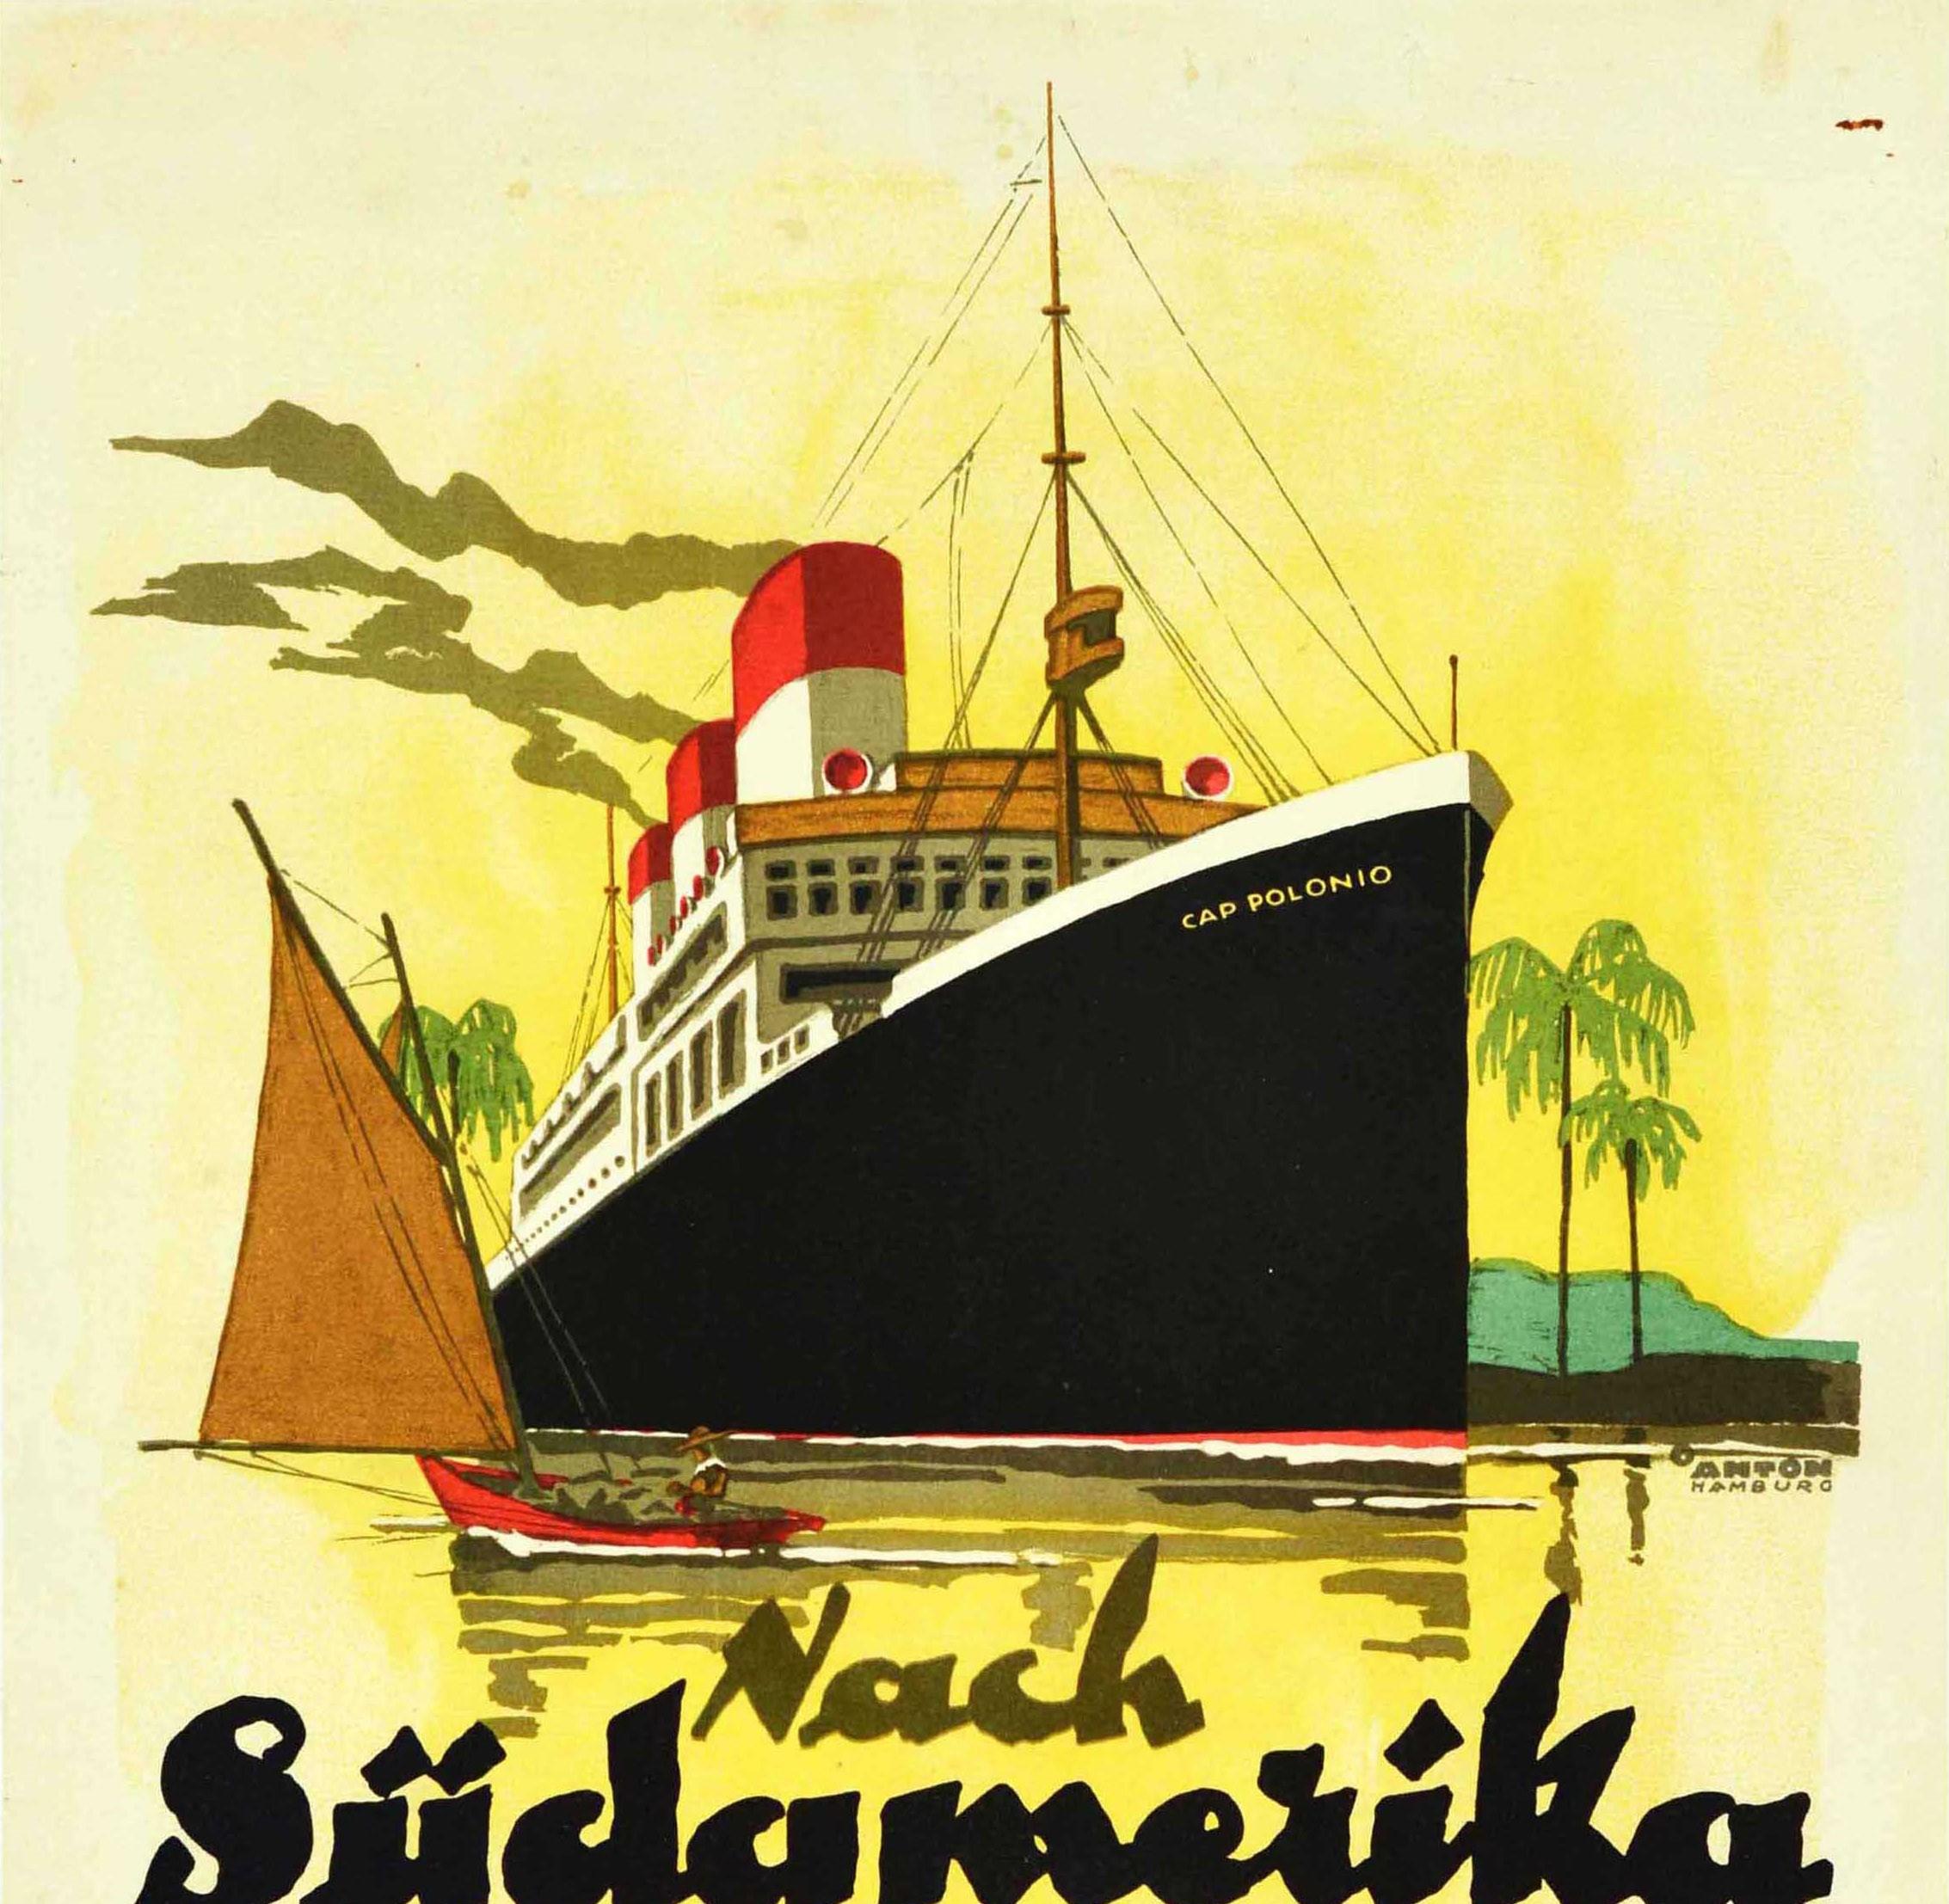 Original Vintage Poster Sudamerika S America Hamburg Sud Cruise Ship Cap Polonio - Print by Ottomar Anton